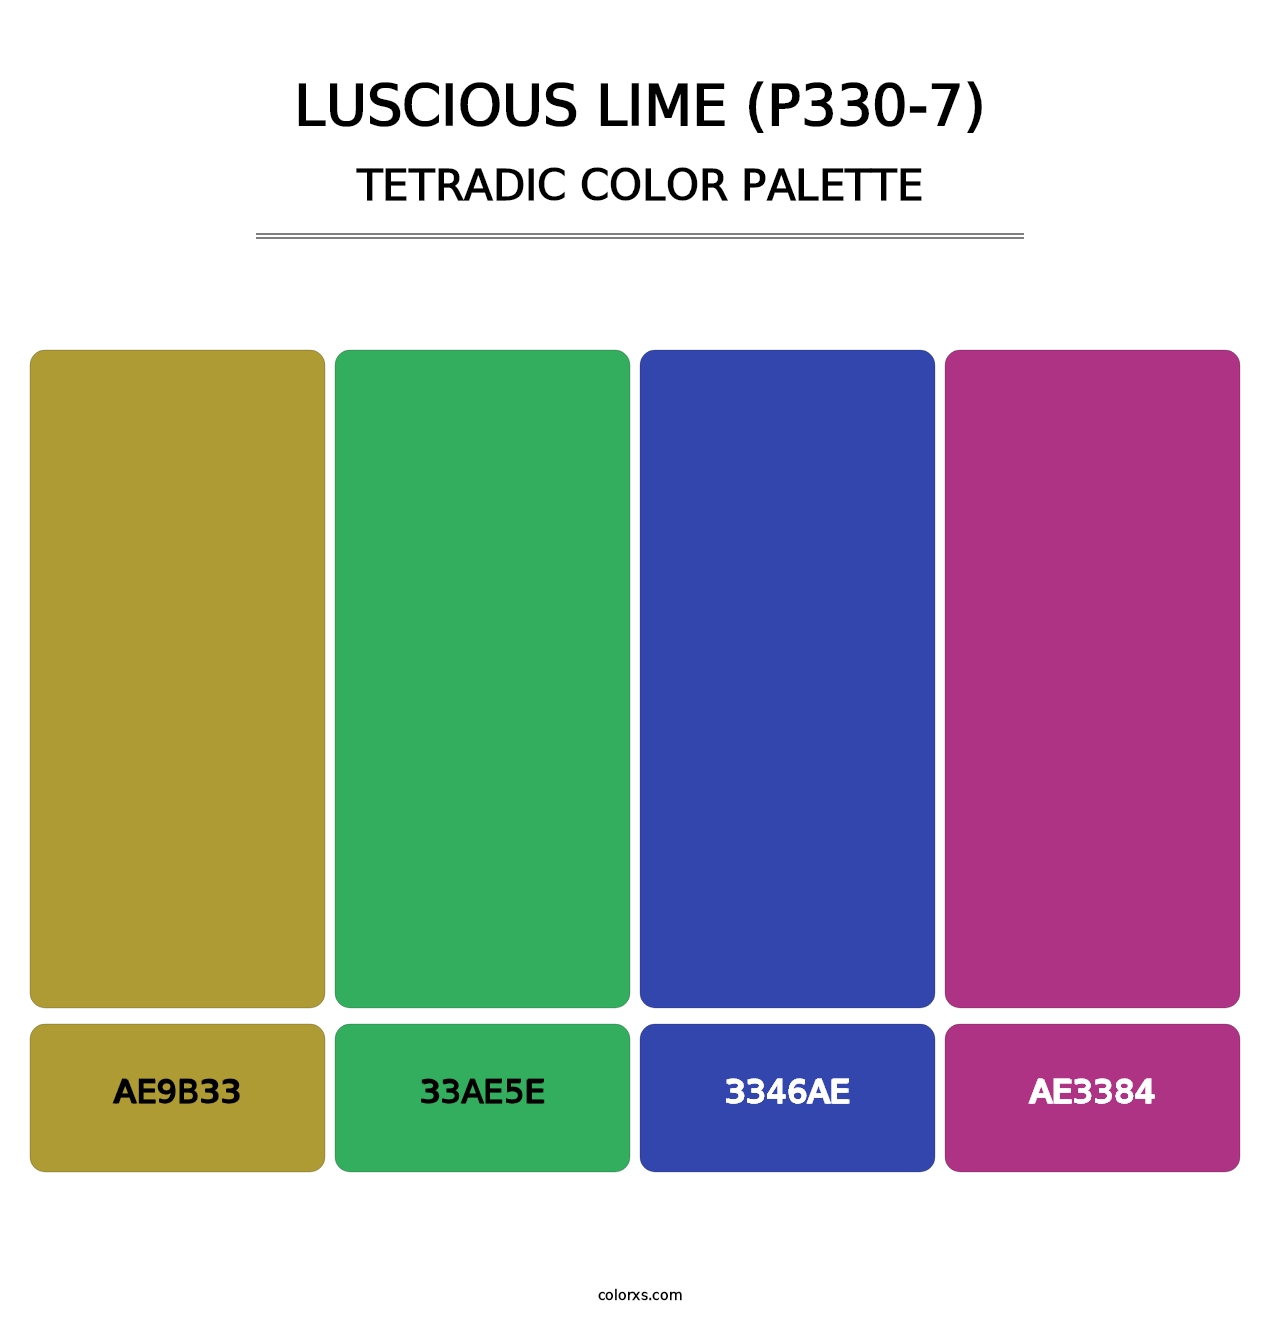 Luscious Lime (P330-7) - Tetradic Color Palette